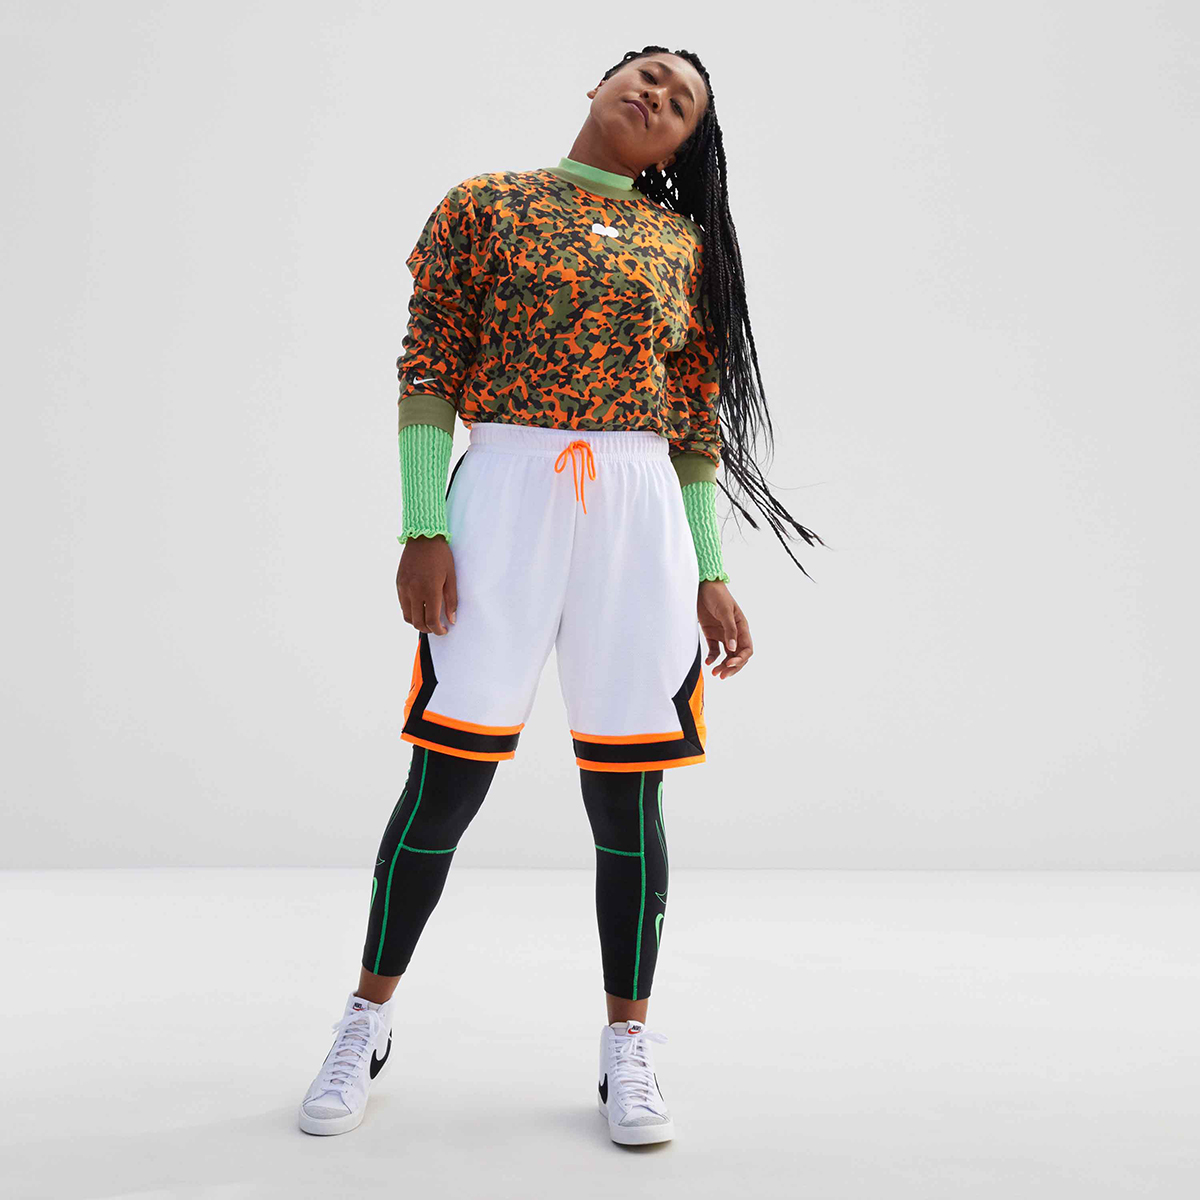 Naomi Osaka's New Nike Collection Just Dropped